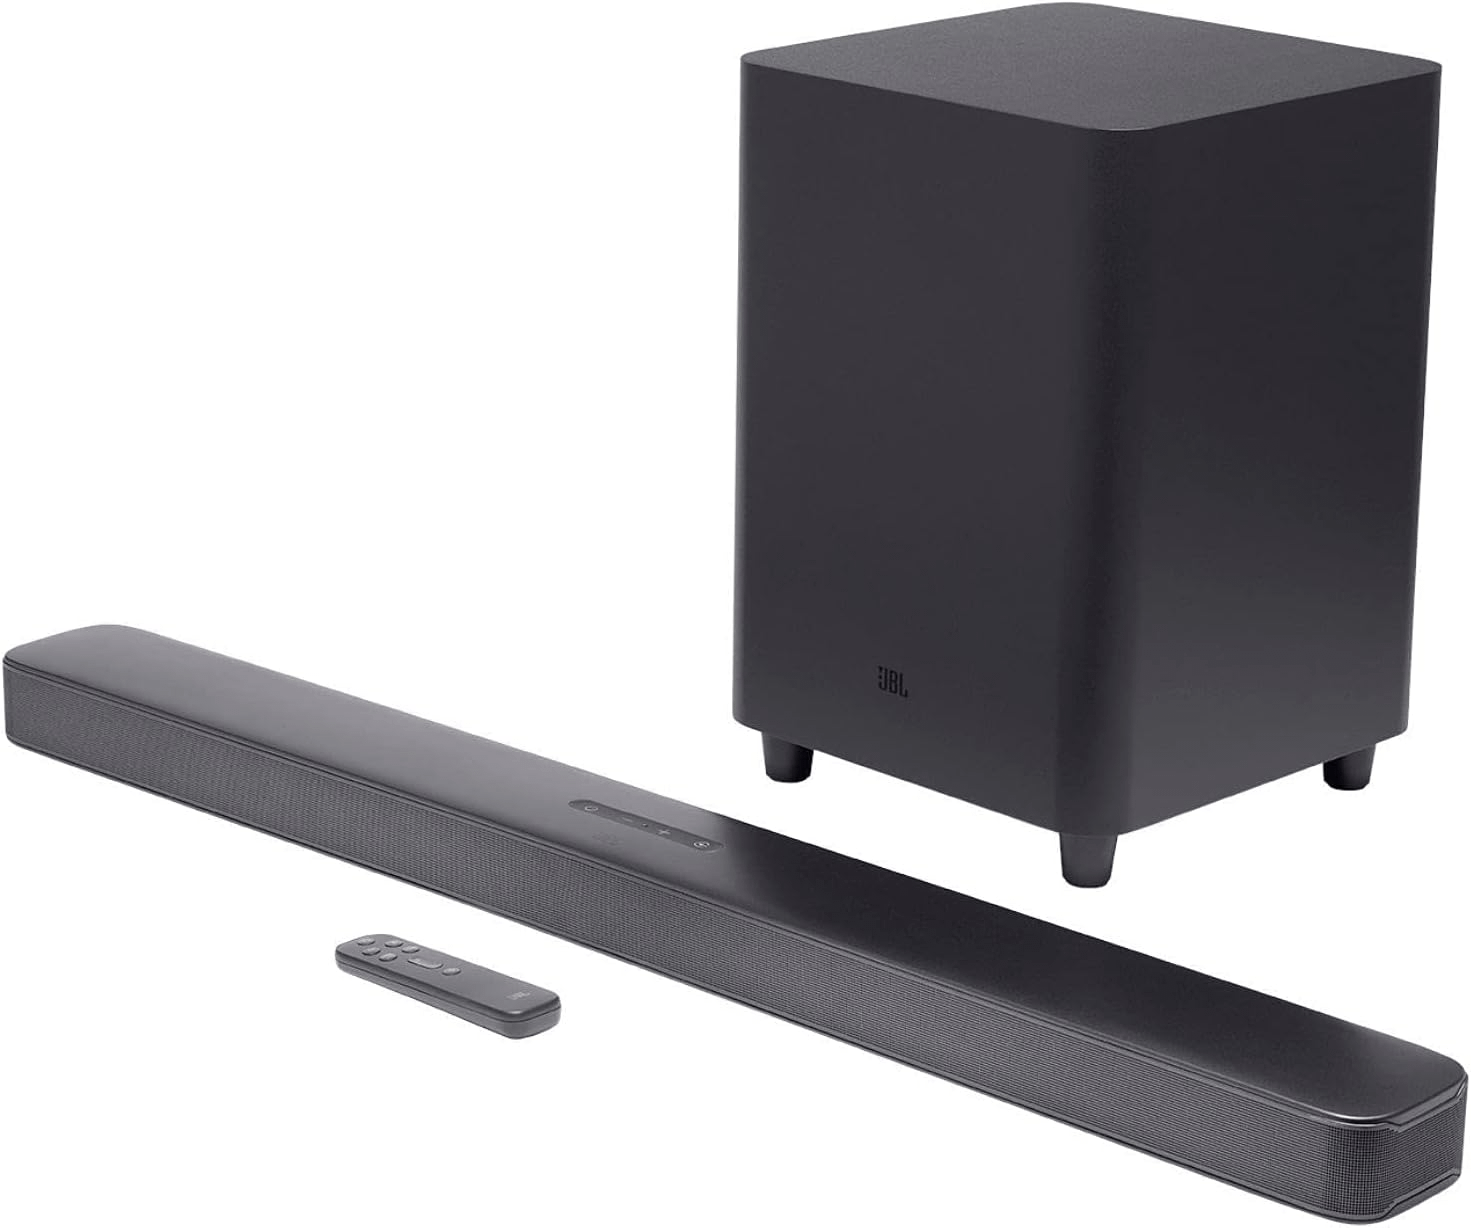 Soundbar Deals - JBL Bar 5.1 - Soundbar with Built-in Virtual Surround, 4K and 10" Wireless Subwoofer